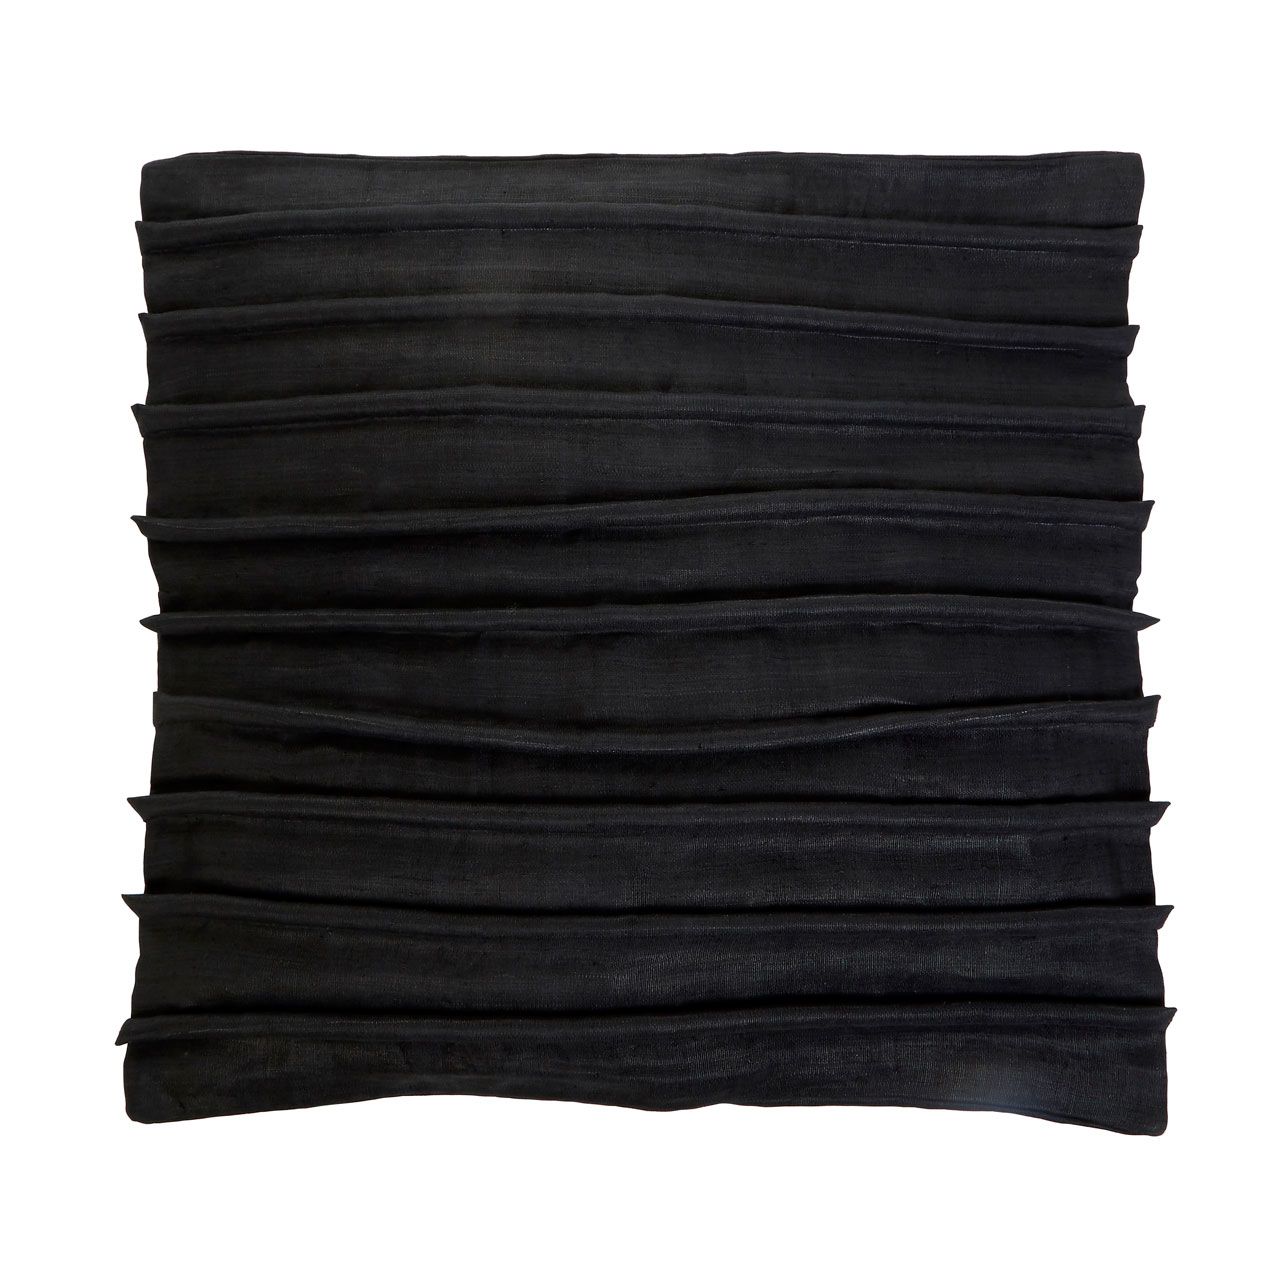 Abaca Black Floor Cushion - Large